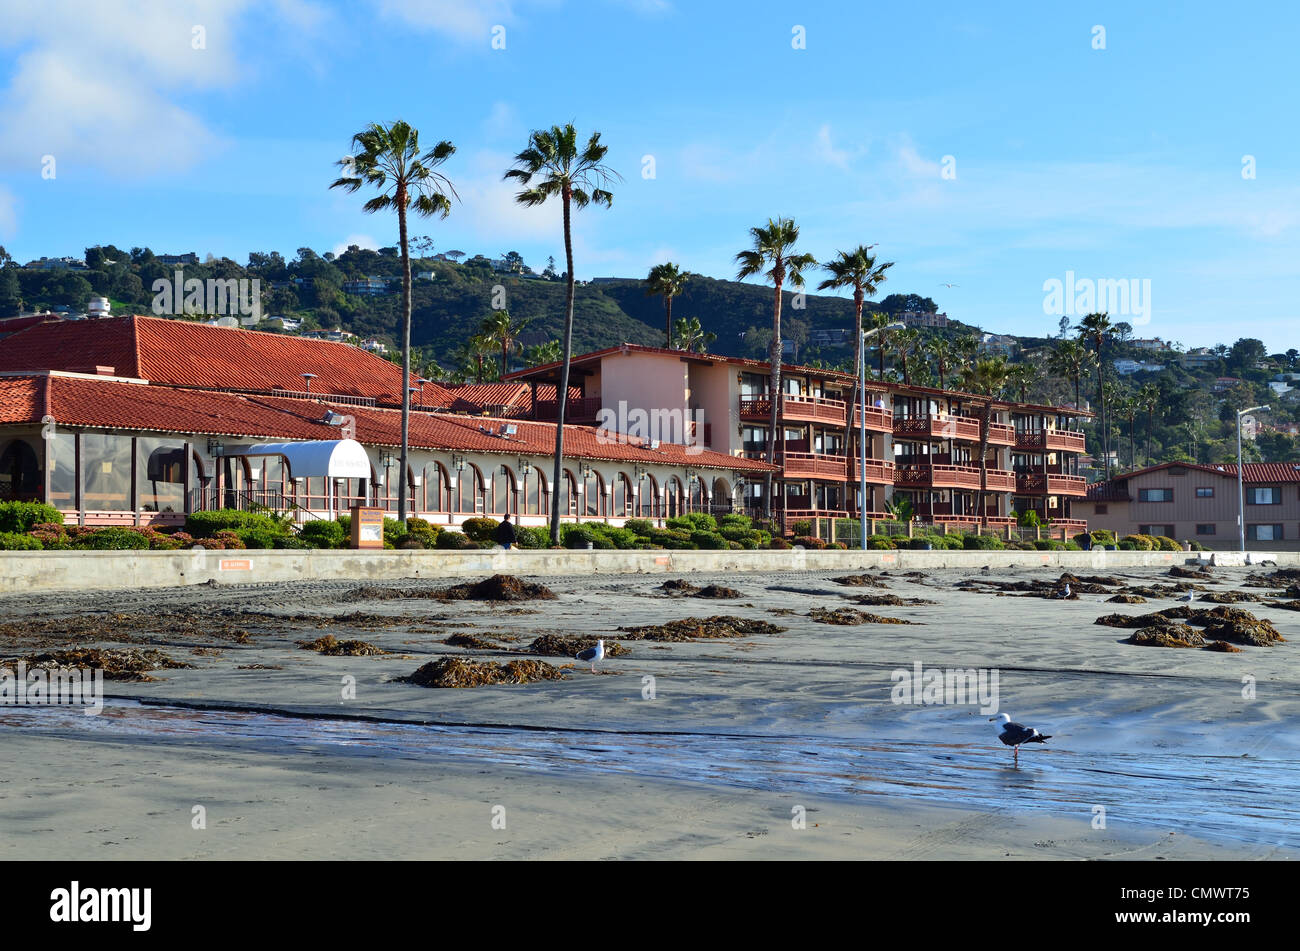 Hotel and condo along the coast. La Jolla, California, USA. Stock Photo